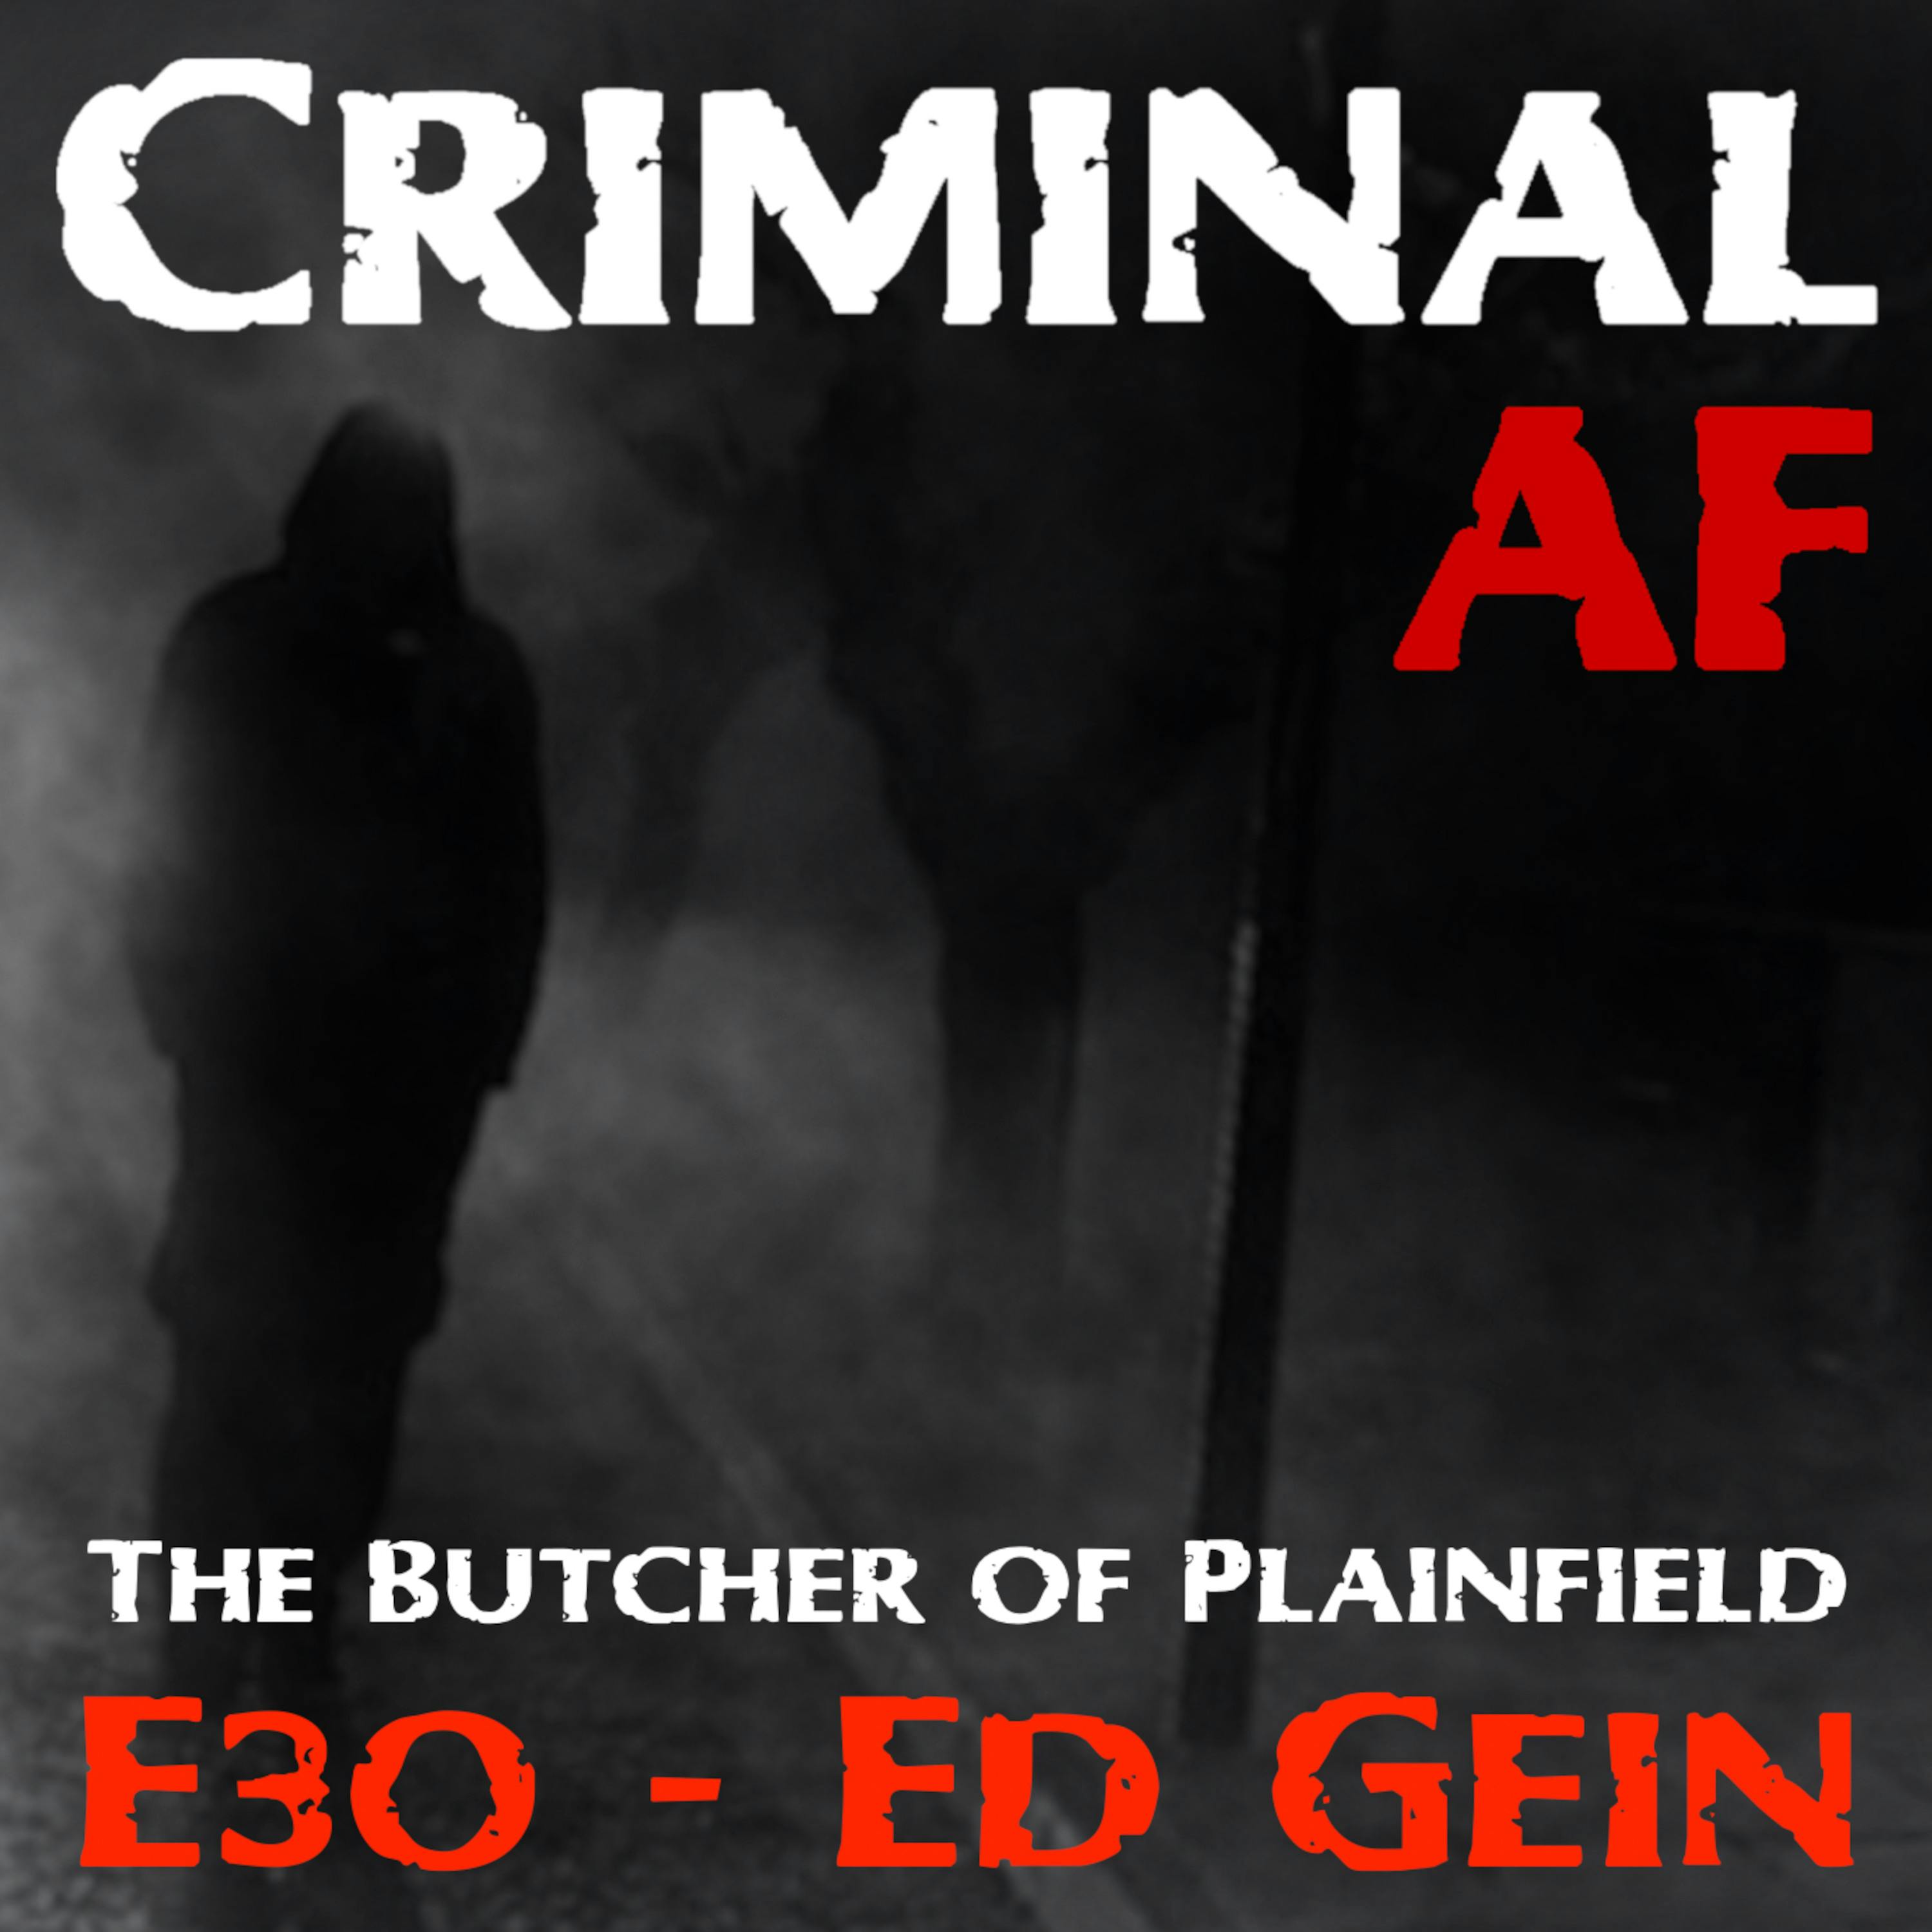 The Butcher of Plainfield - Ed Gein E30